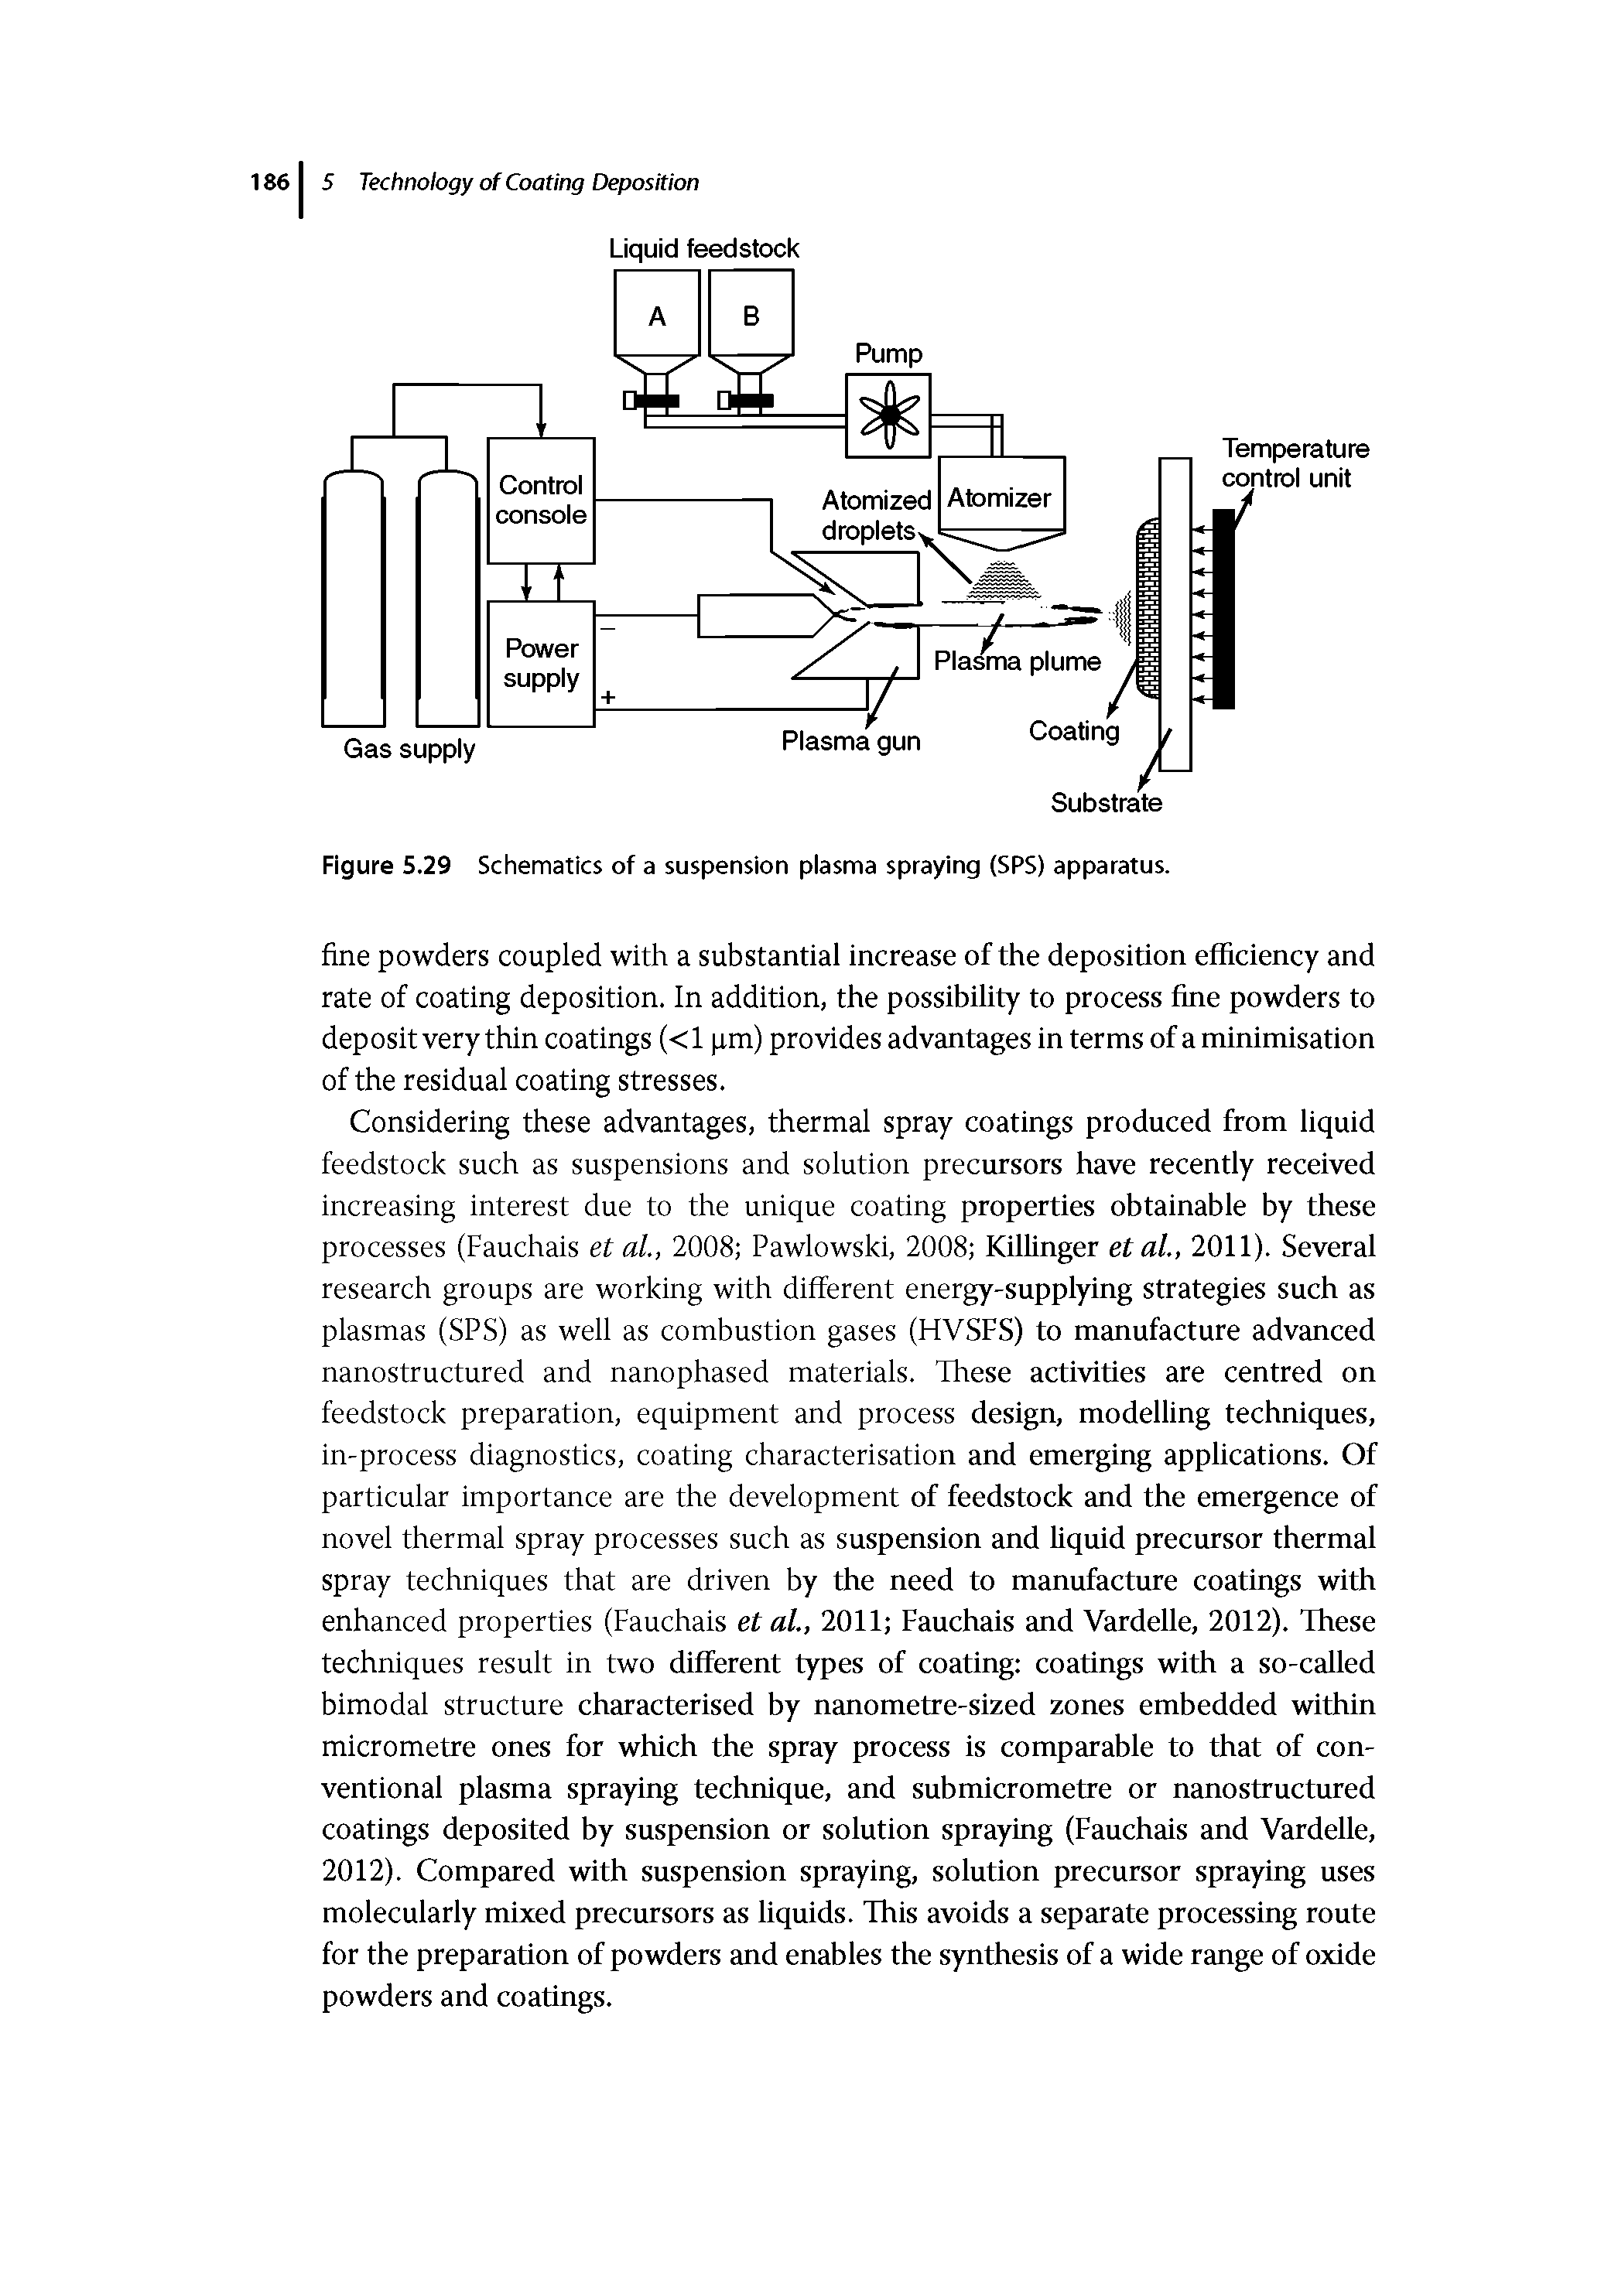 Figure 5.29 Schematics of a suspension plasma spraying (SPS) apparatus.